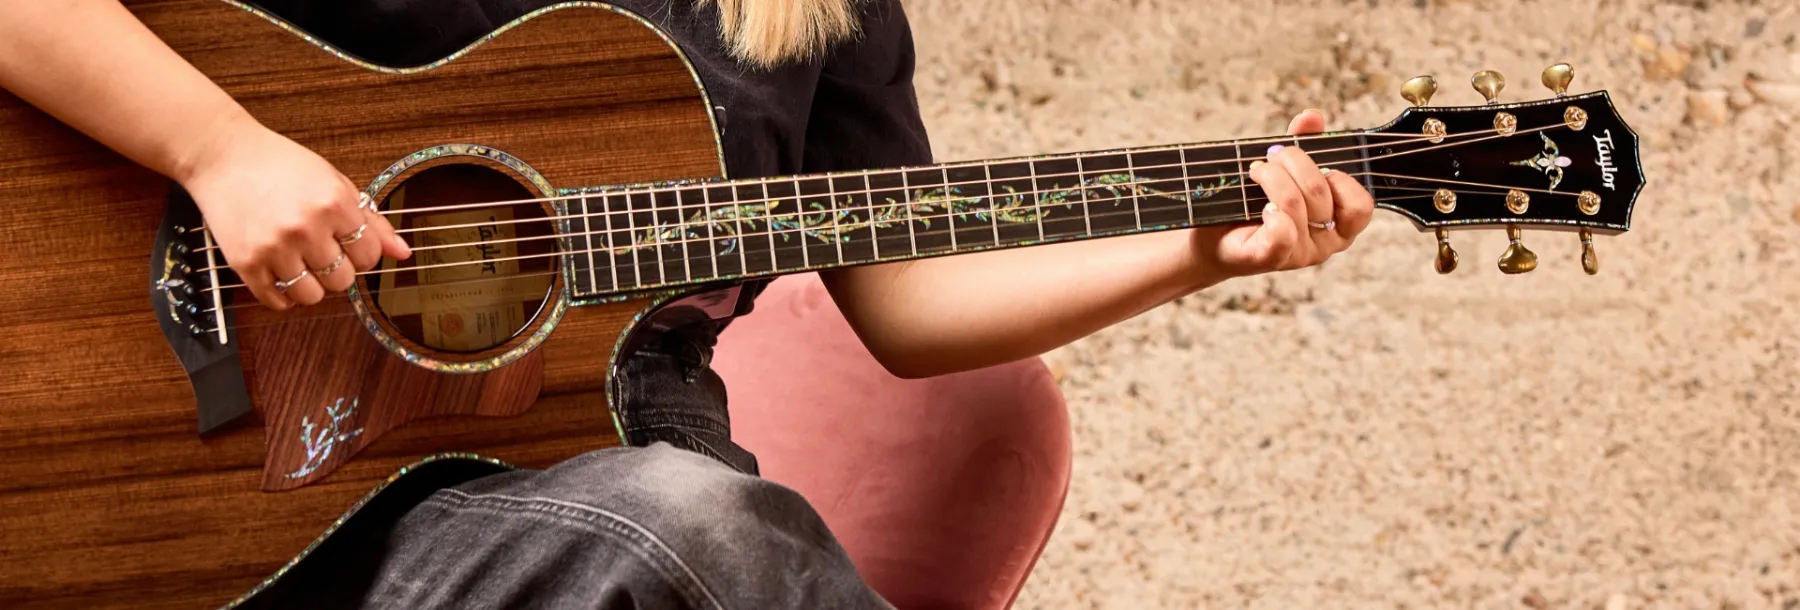 Taylor Guitars (@TaylorGuitars) / X